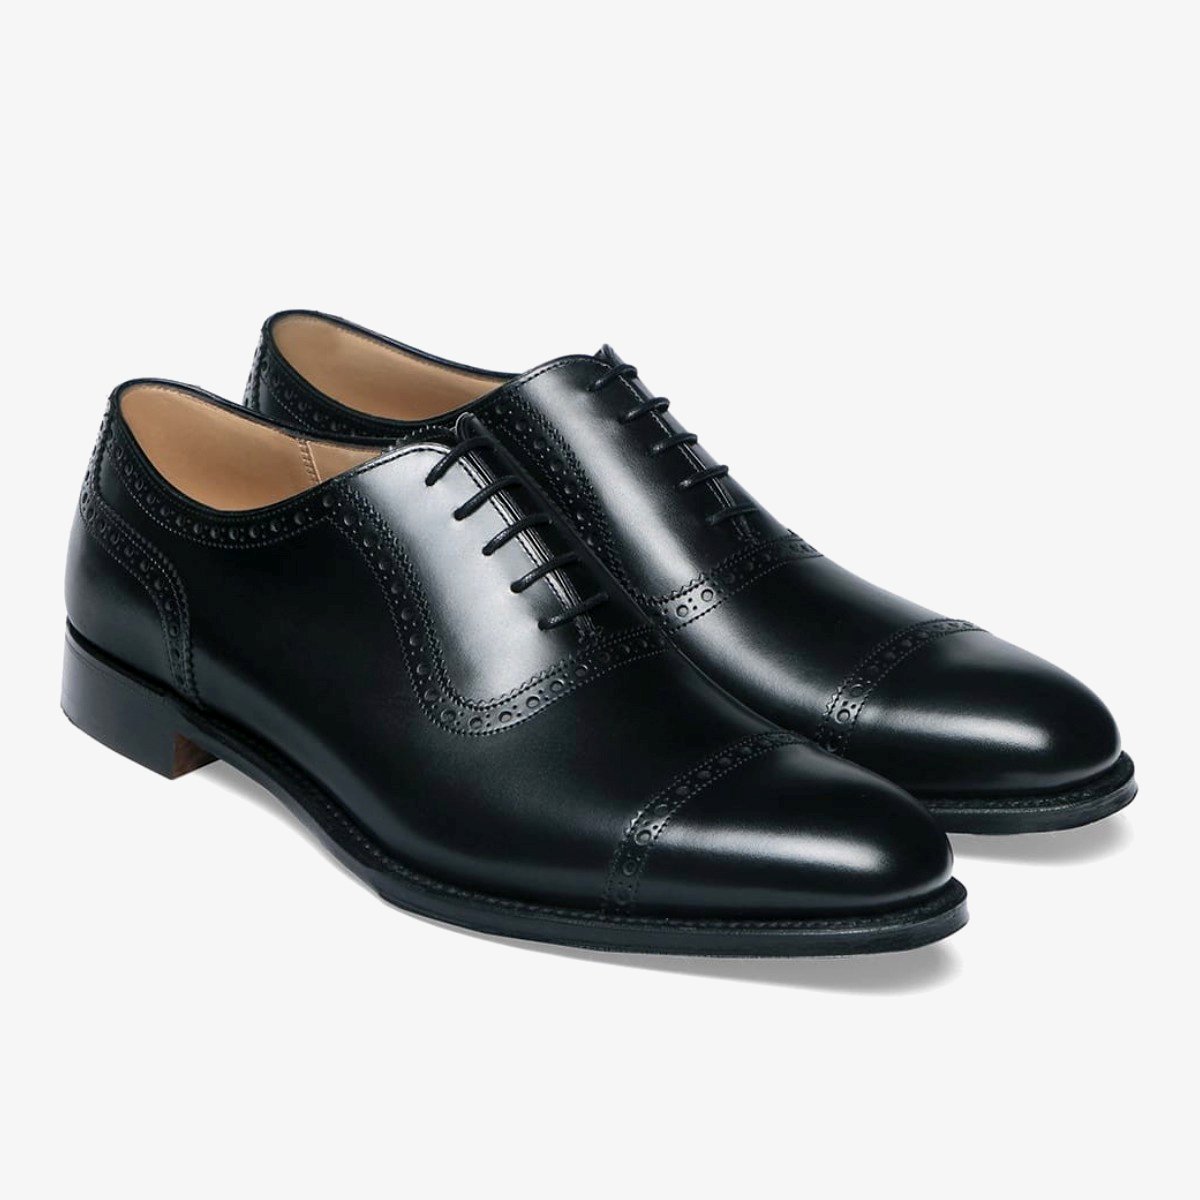 Cheaney Fenchurch black brogue men's oxford shoes